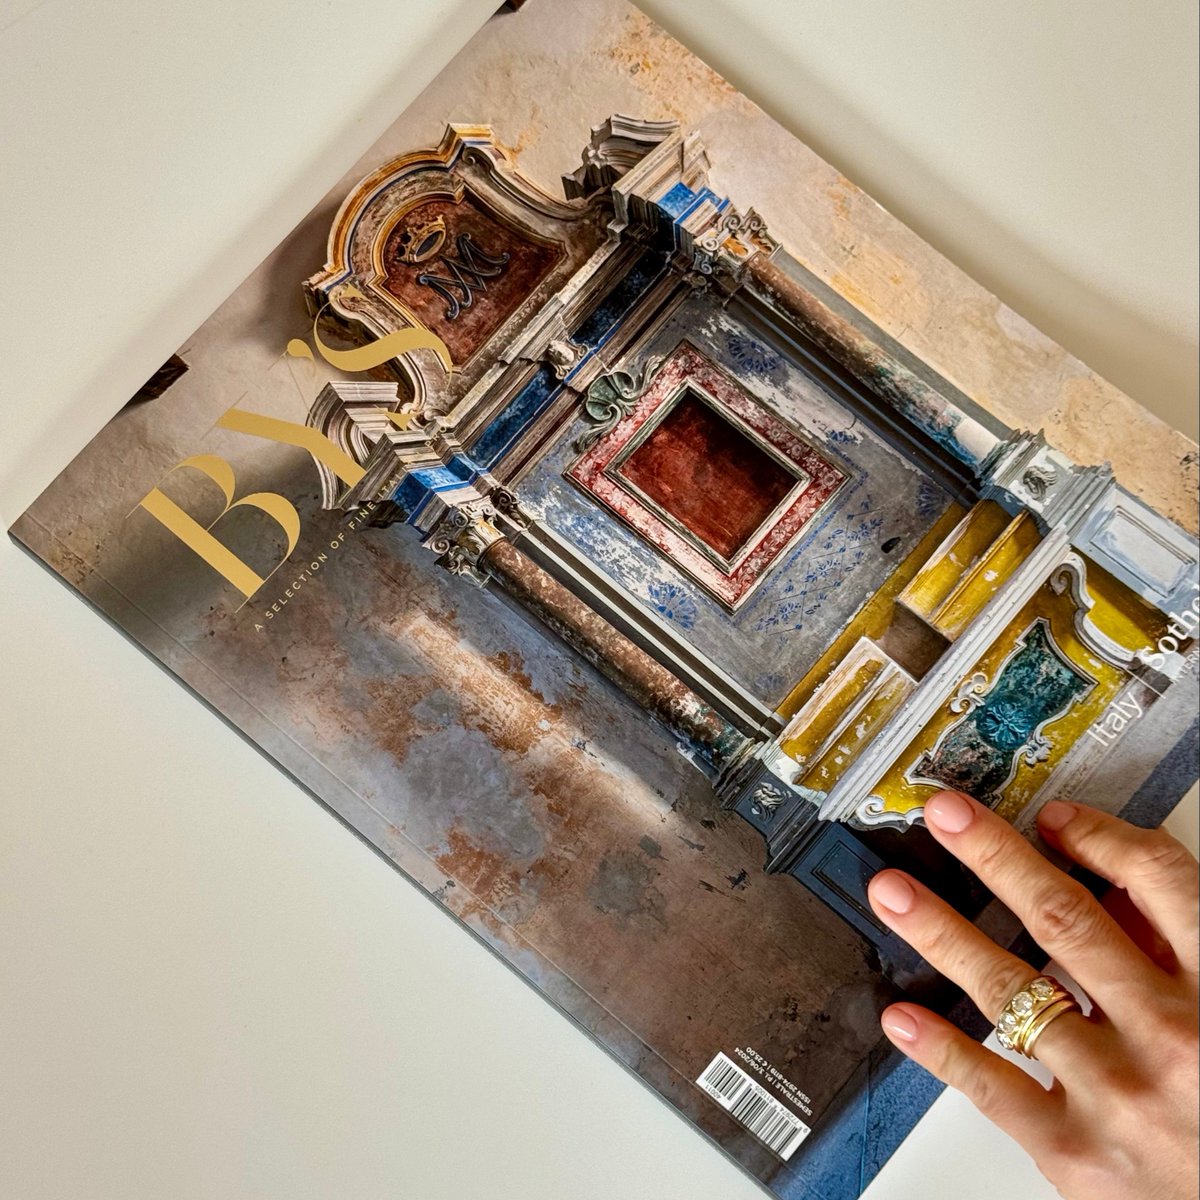 Our Spring Issue 2024 is here! 
Learn more: Learn more: l8r.it/BVyM

#BysMagazine #SpringIssue #Umbria #Comunaglia #ArtBasel #VincenzoDeBellis #AntonioMarras #Sardinia #Reschio #CulturalJourney #HiddenGems #ArchitecturalBeauty